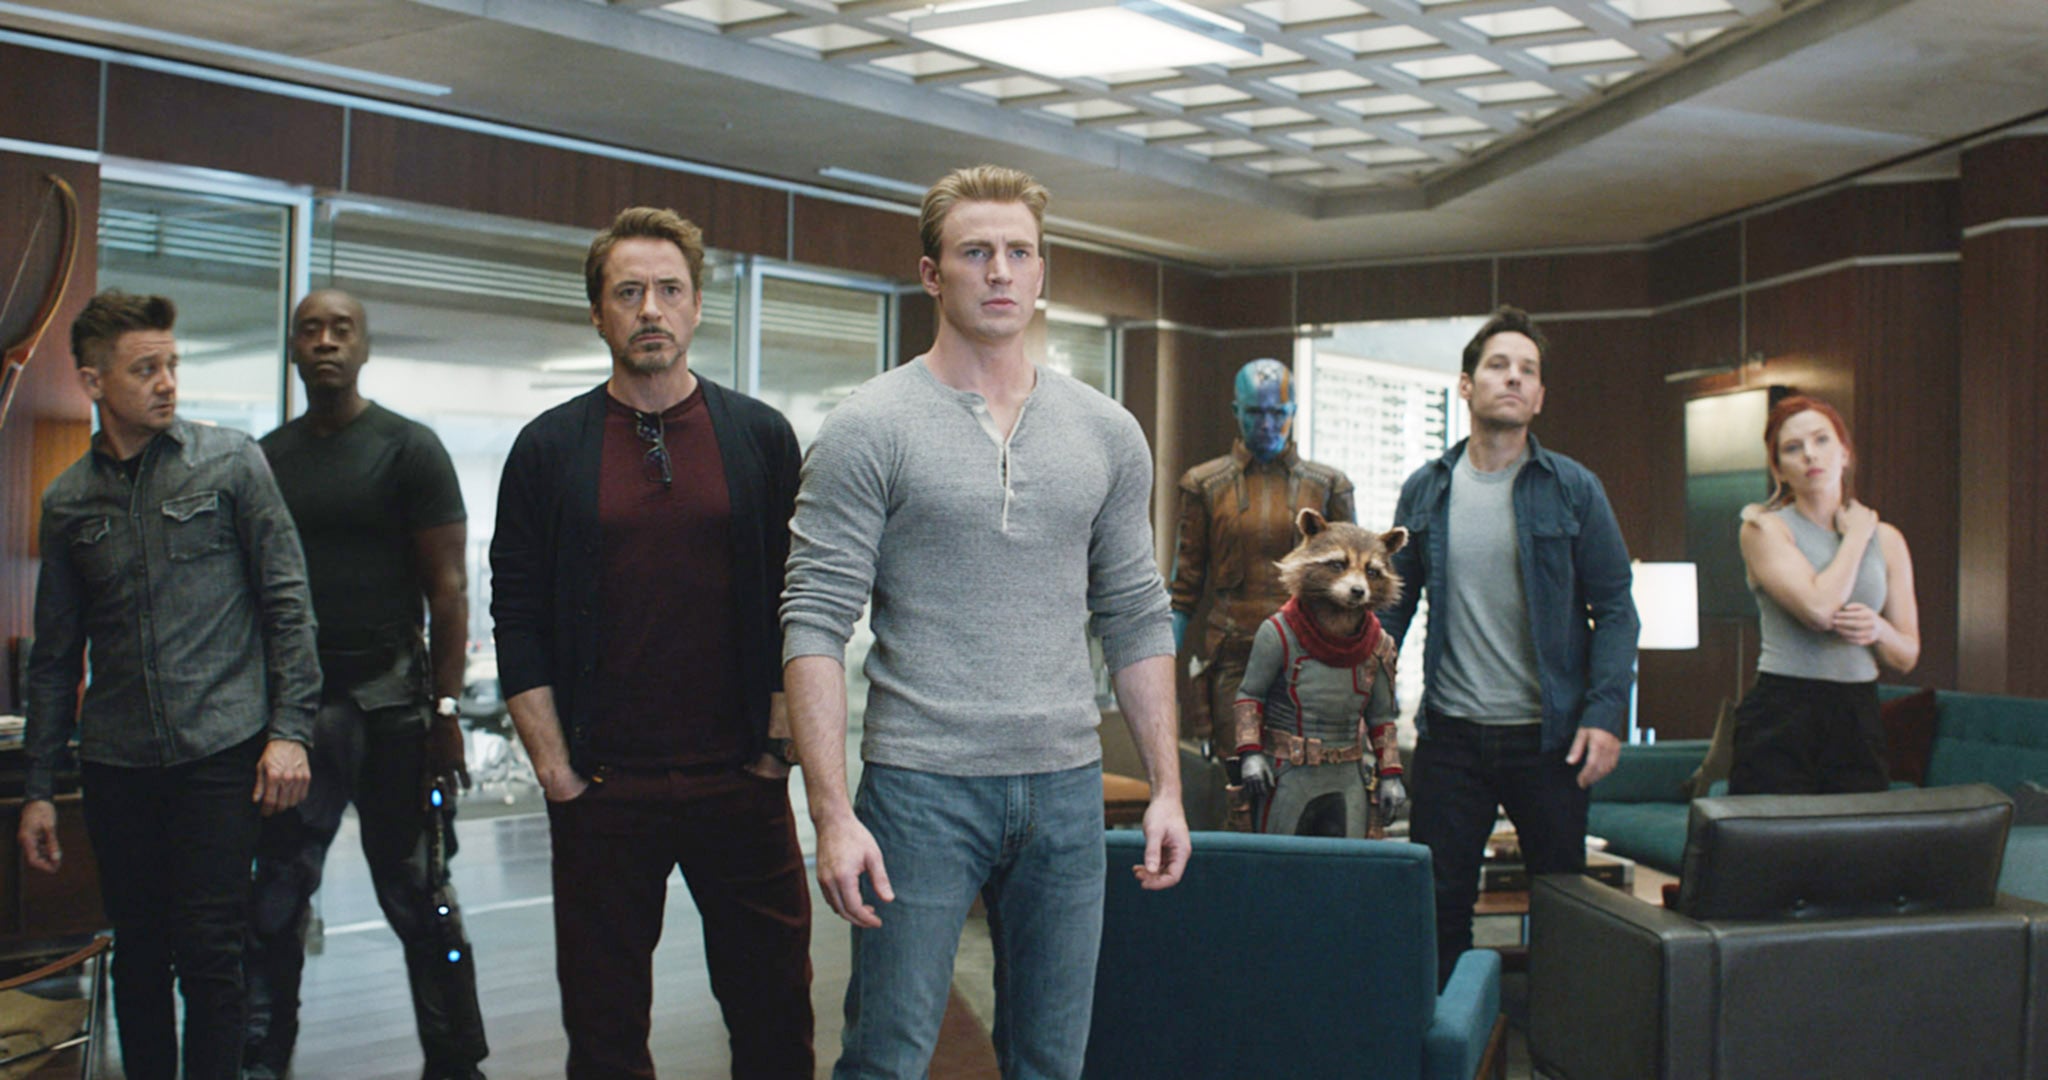 IMDb on X: #Avengers: Endgame (2019) behind-the-scenes 📸 https